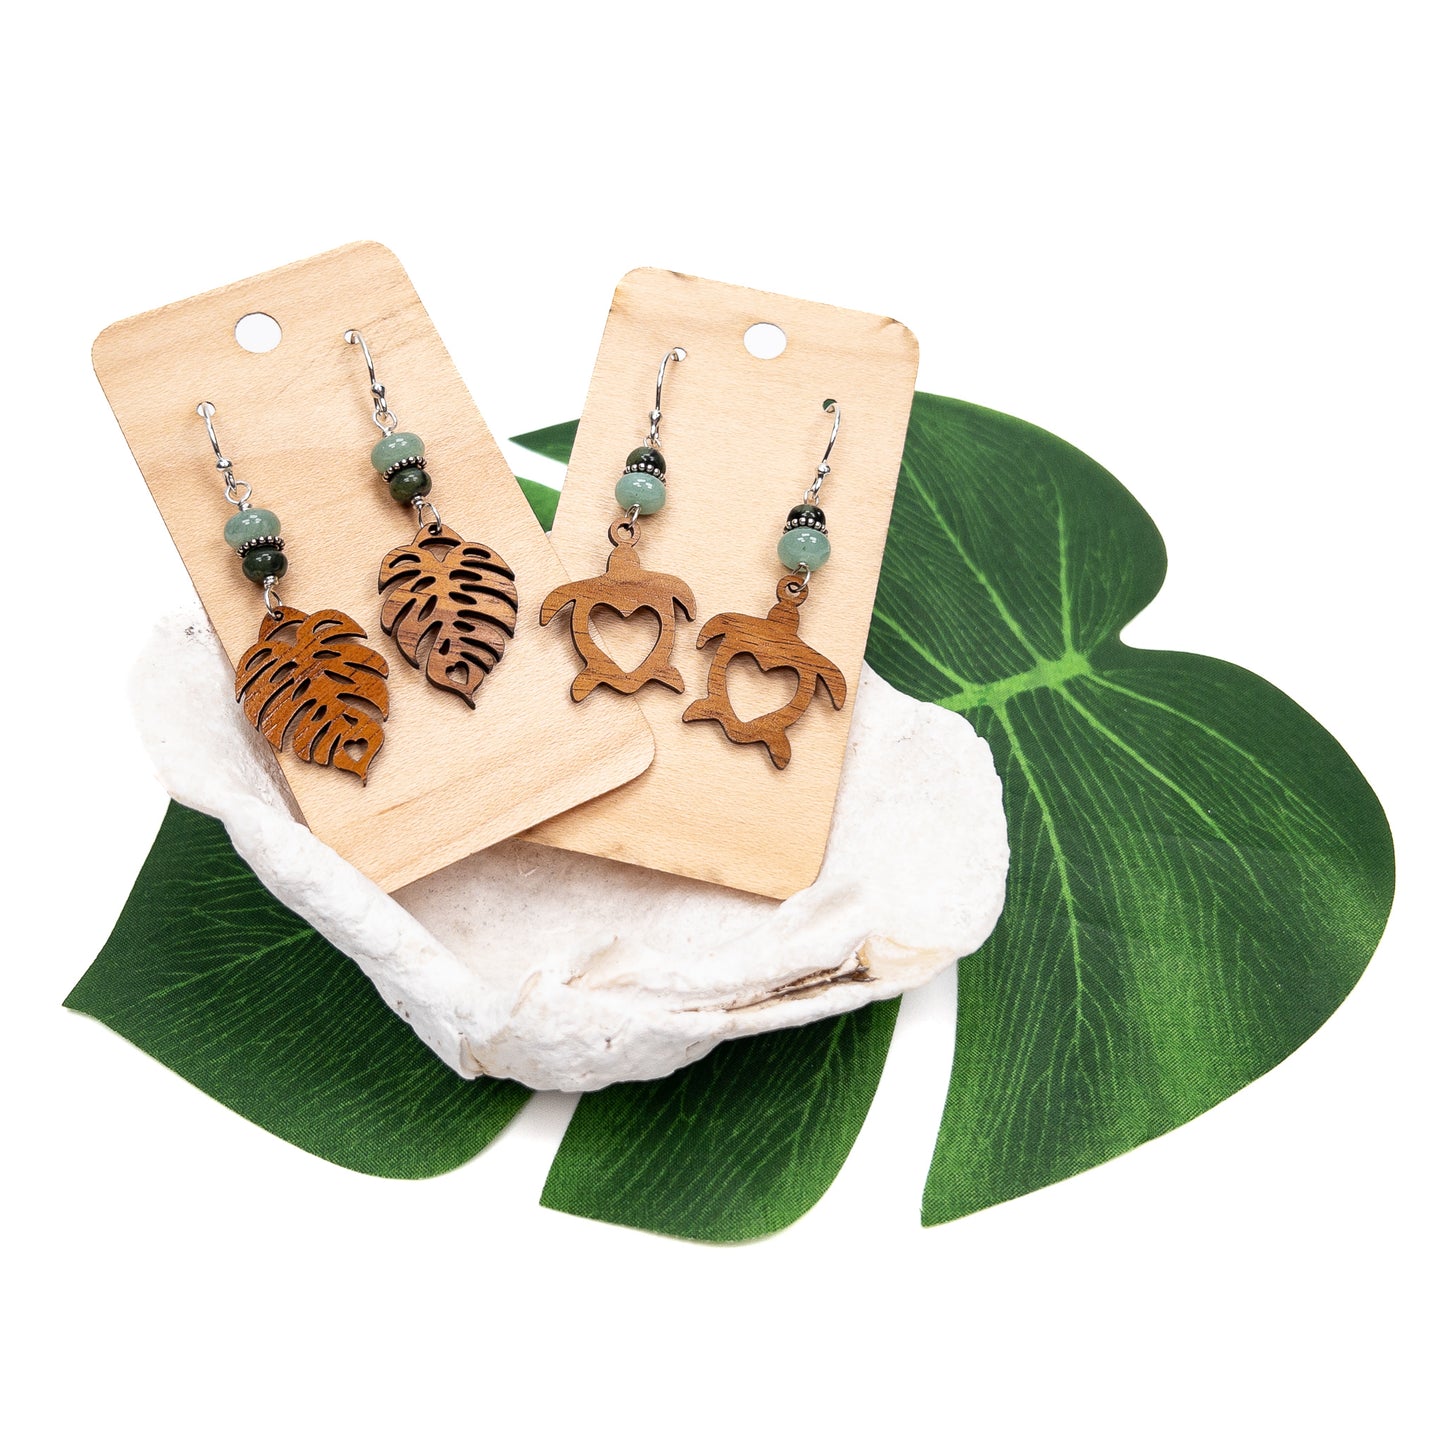 Lucky in Hawaii Earring Kit: Monstera Leaf or Turtle